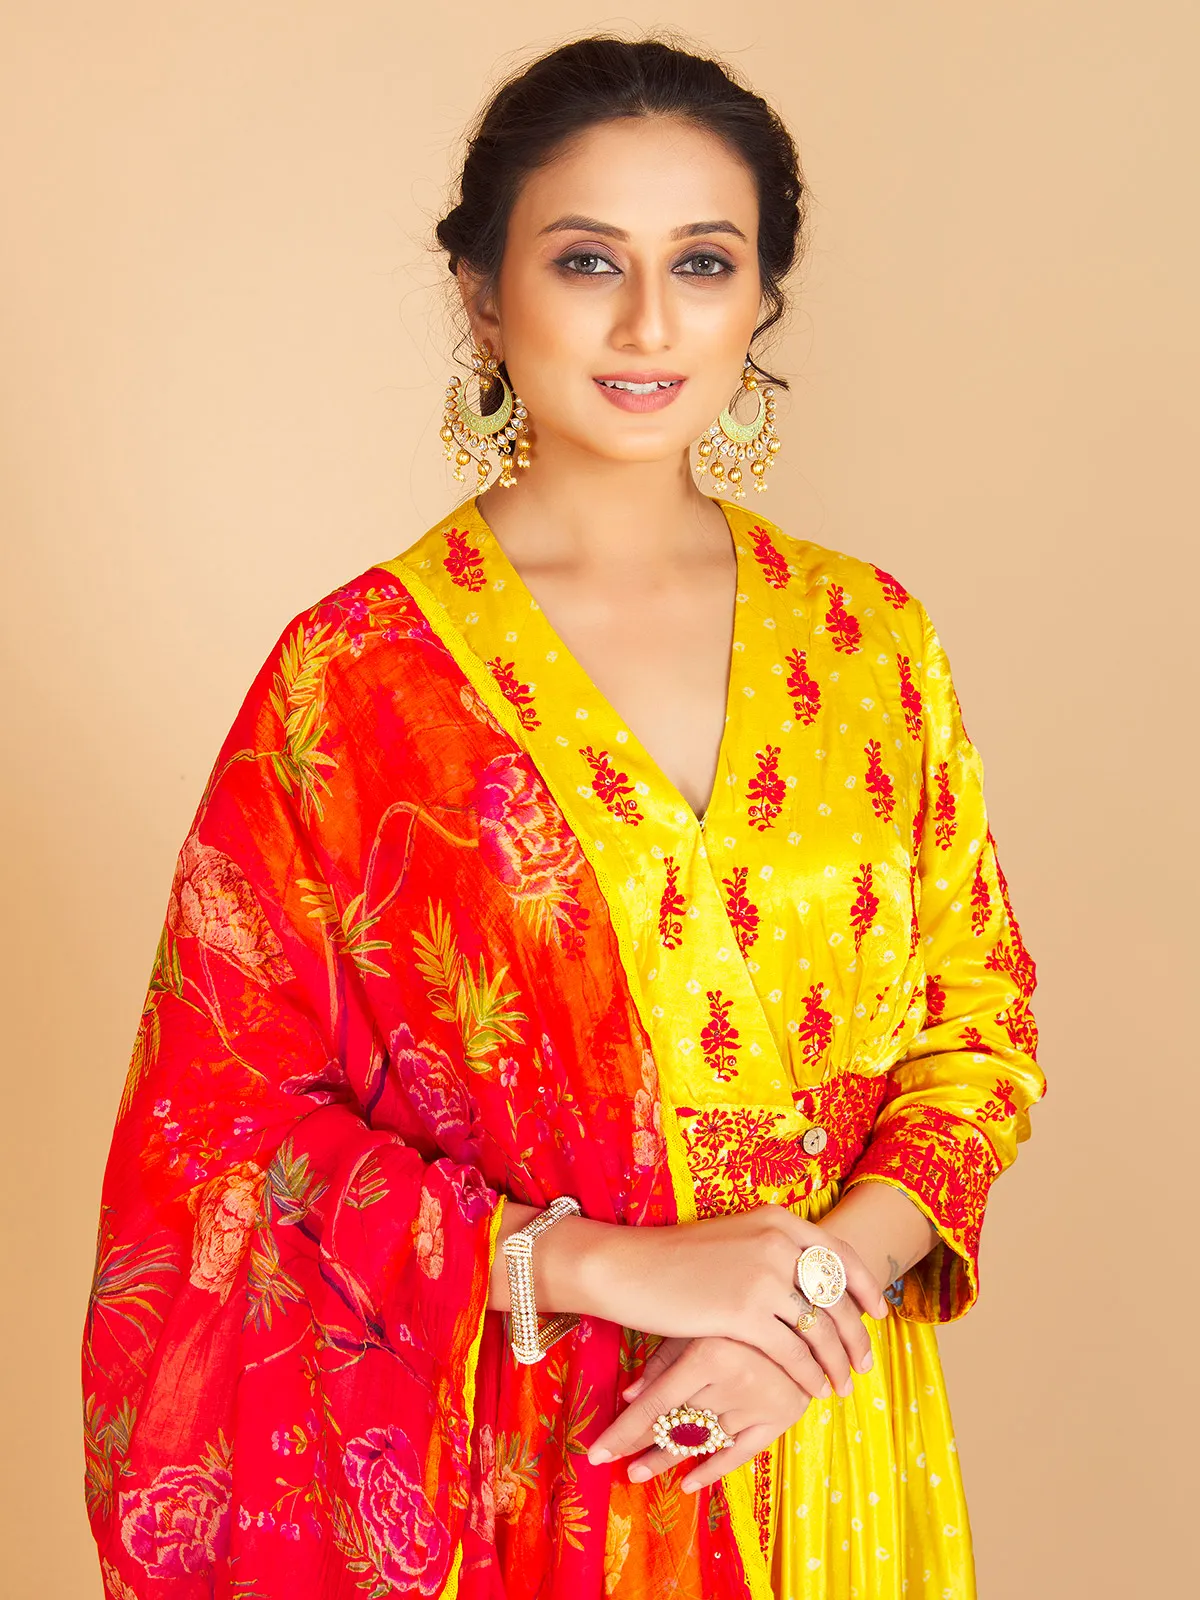 Bright yellow silk printed salwar suit